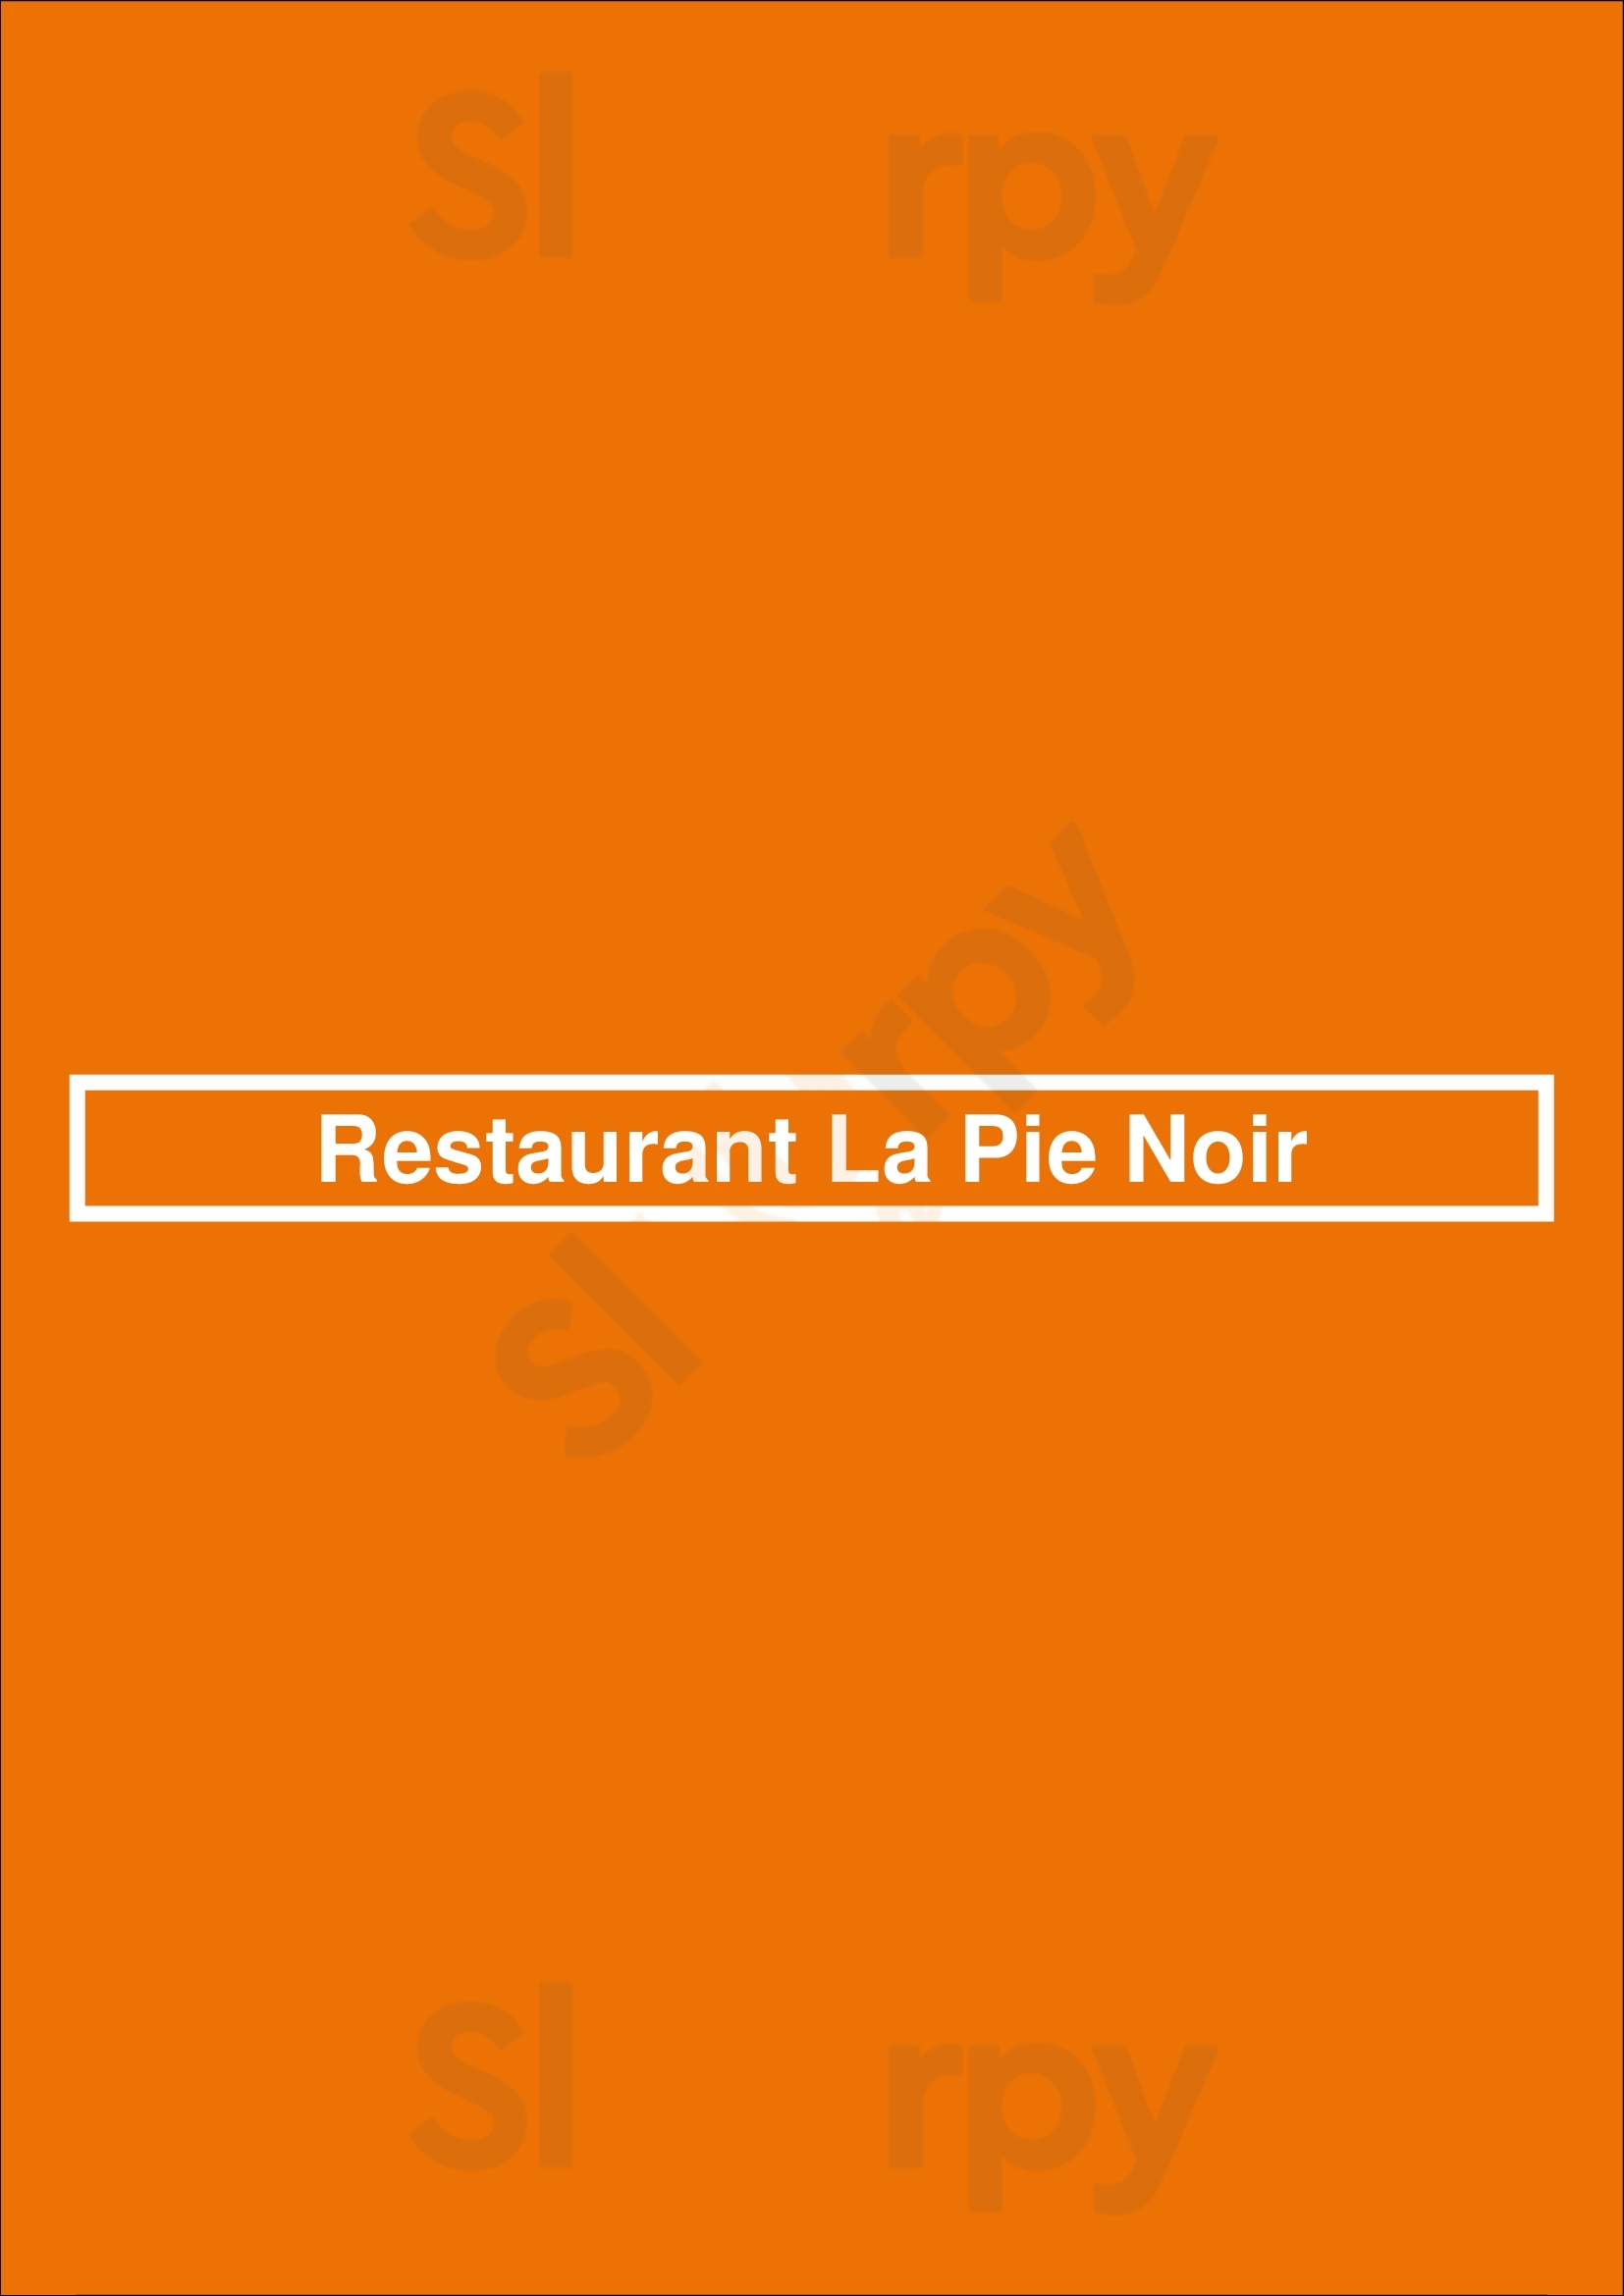 Restaurant La Pie Noir Paris Menu - 1